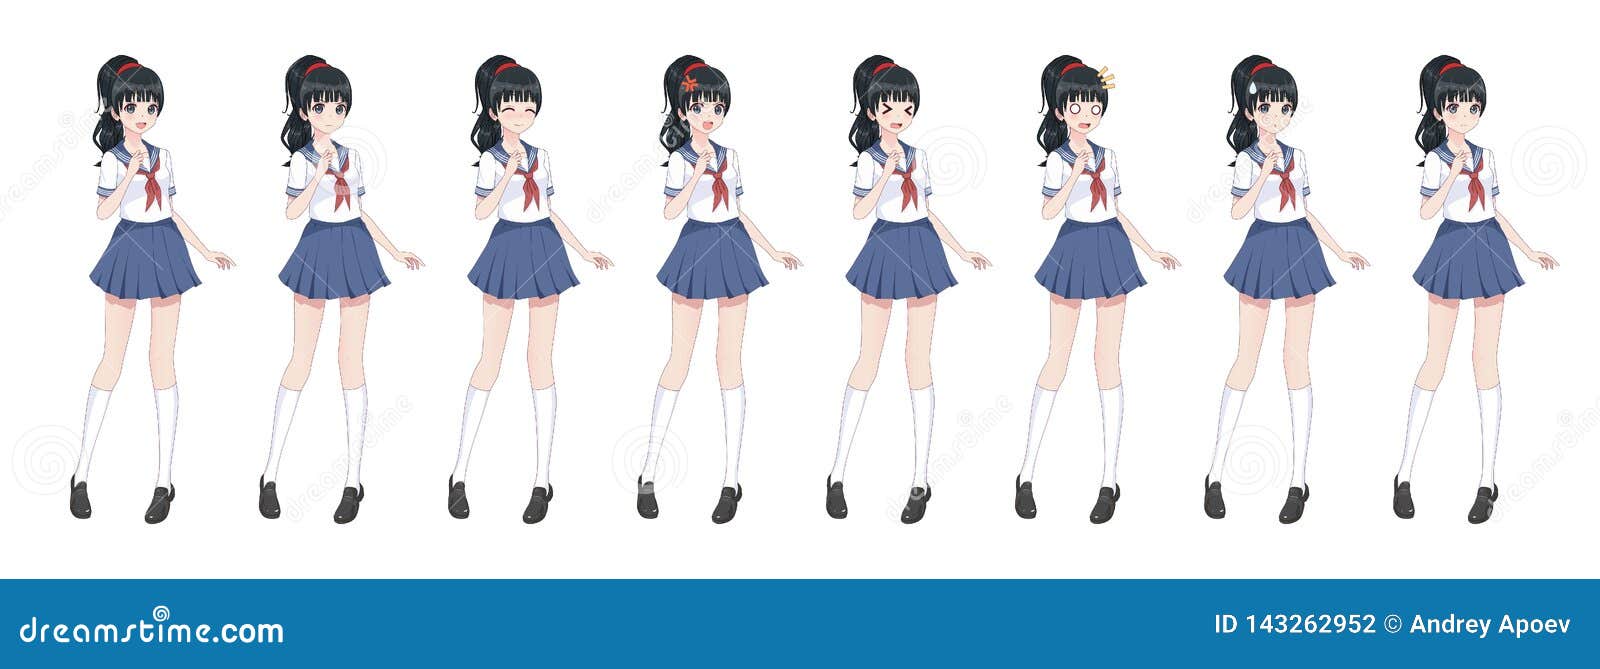 Trendy clothing ideas slim anime girl sailor suit